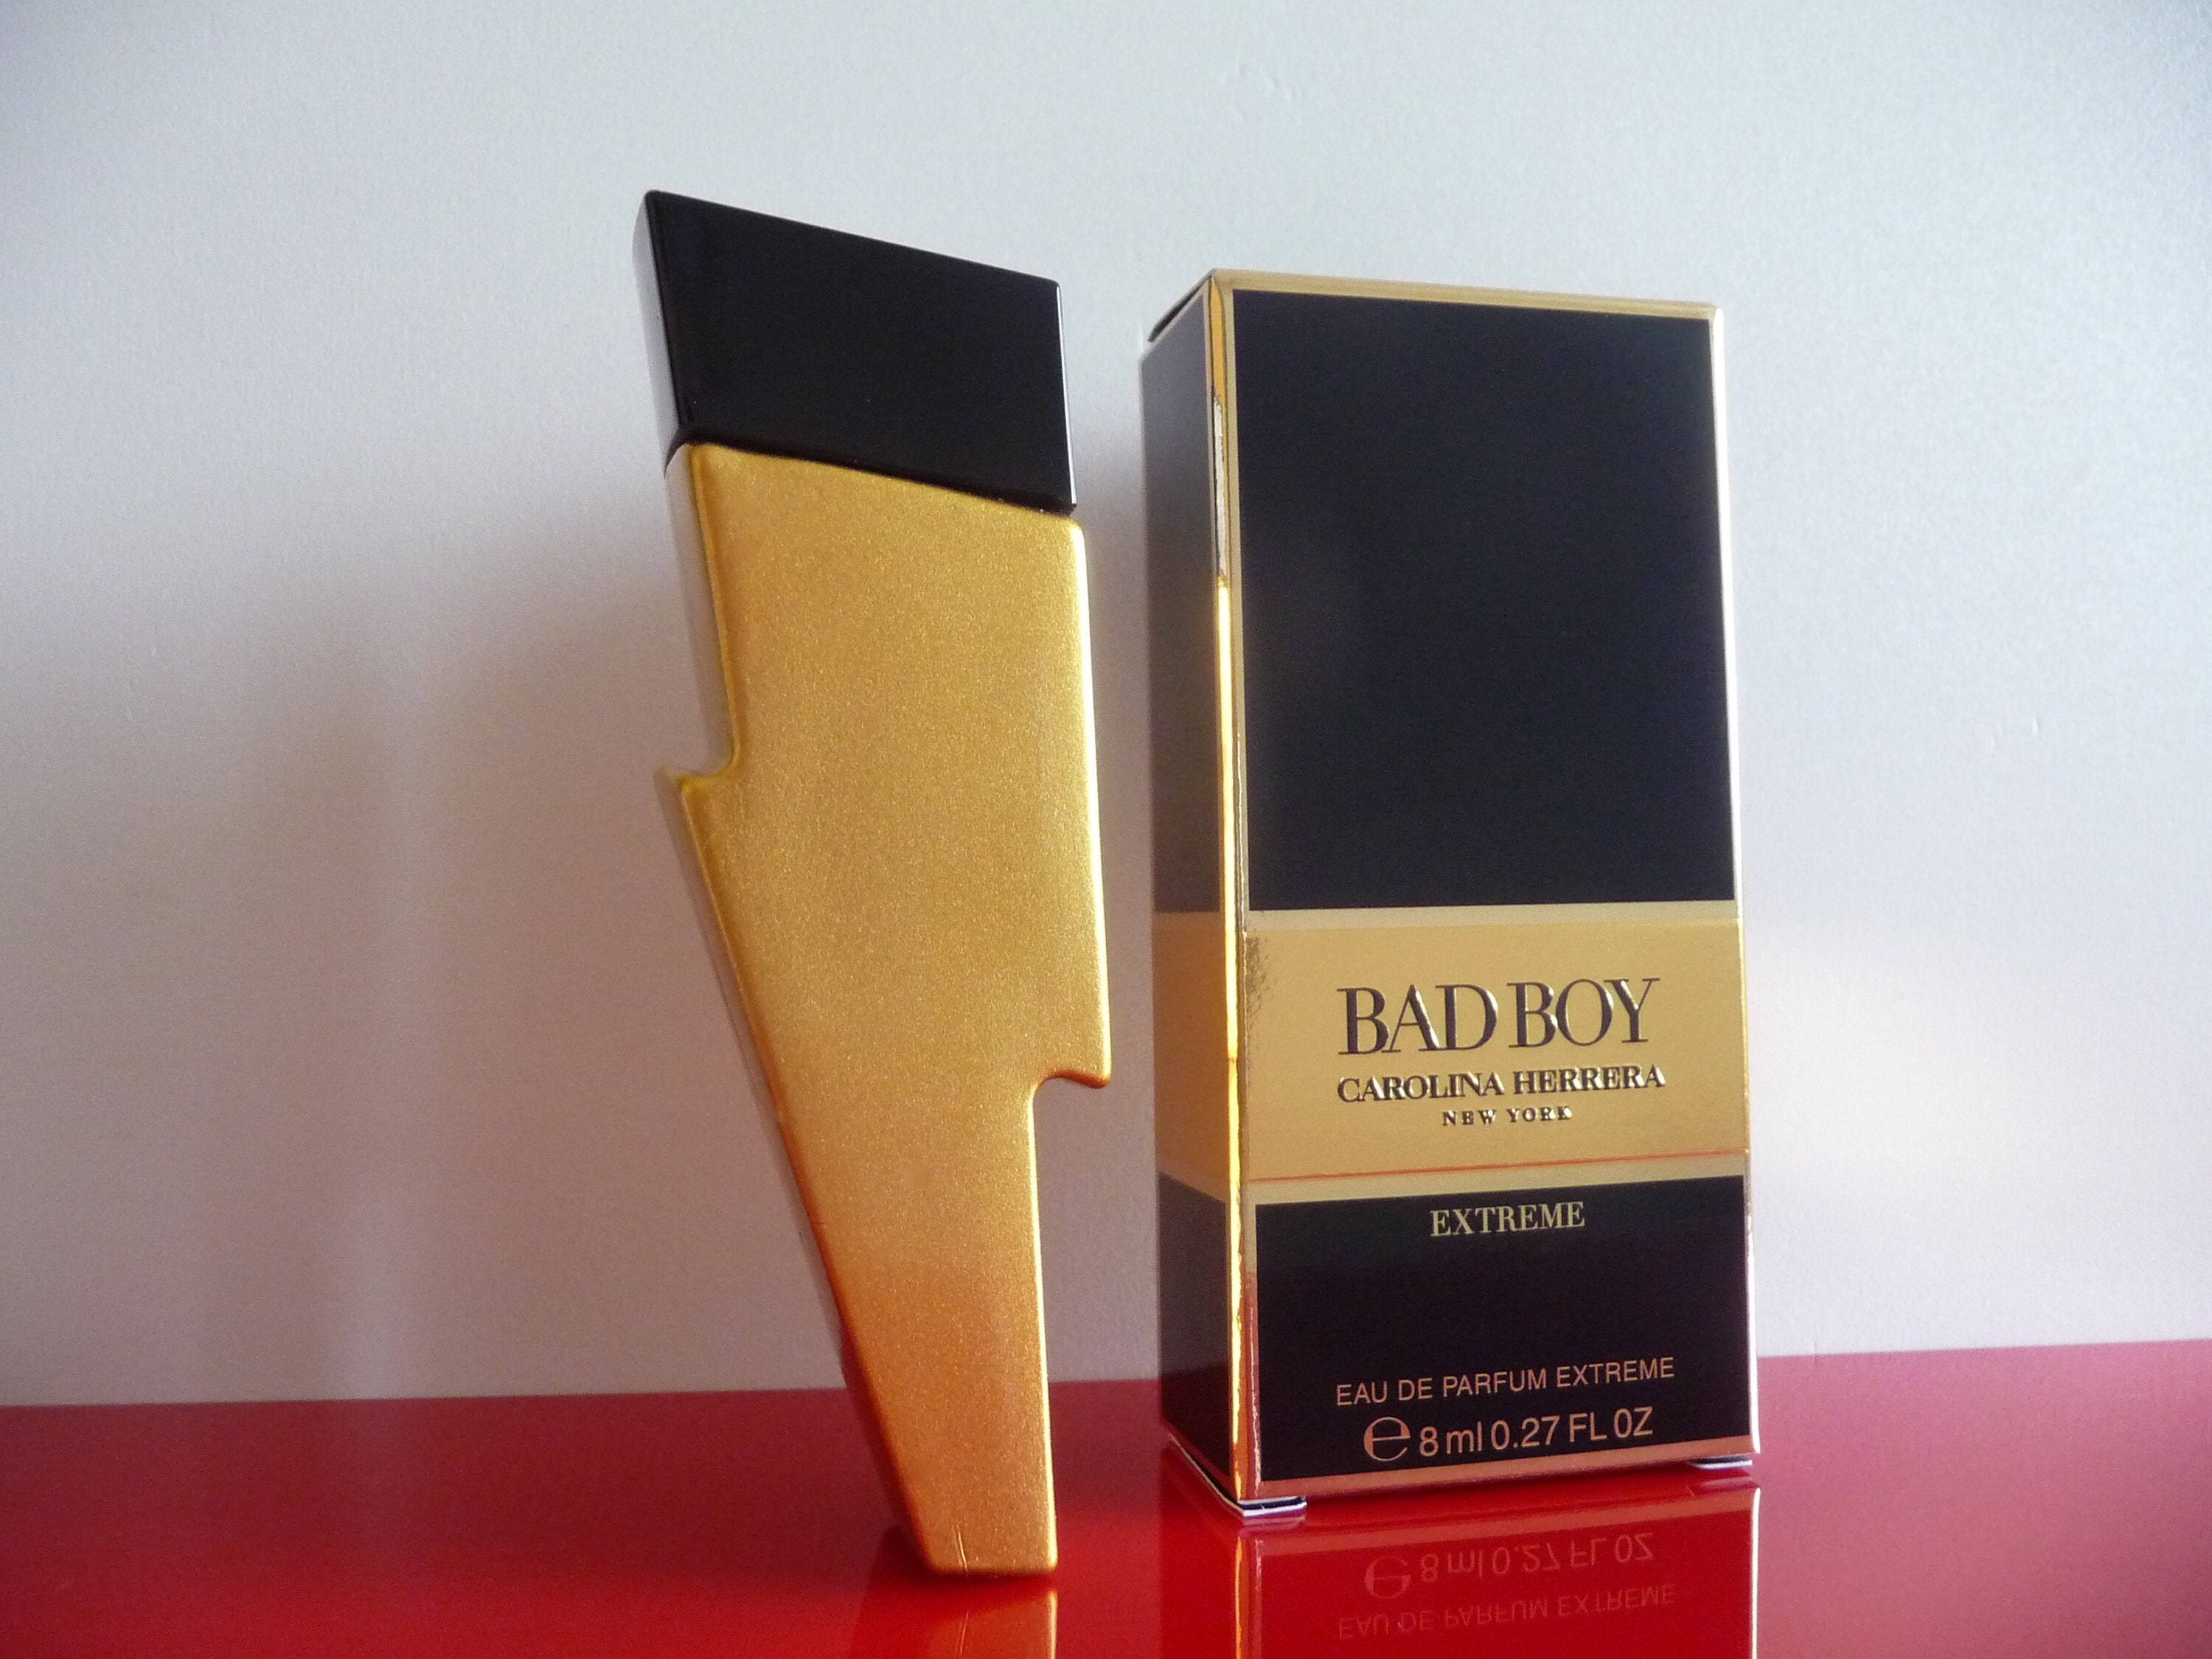 Carolina Herrera Bad Boy Extreme Eau de Parfum - 3.4 oz